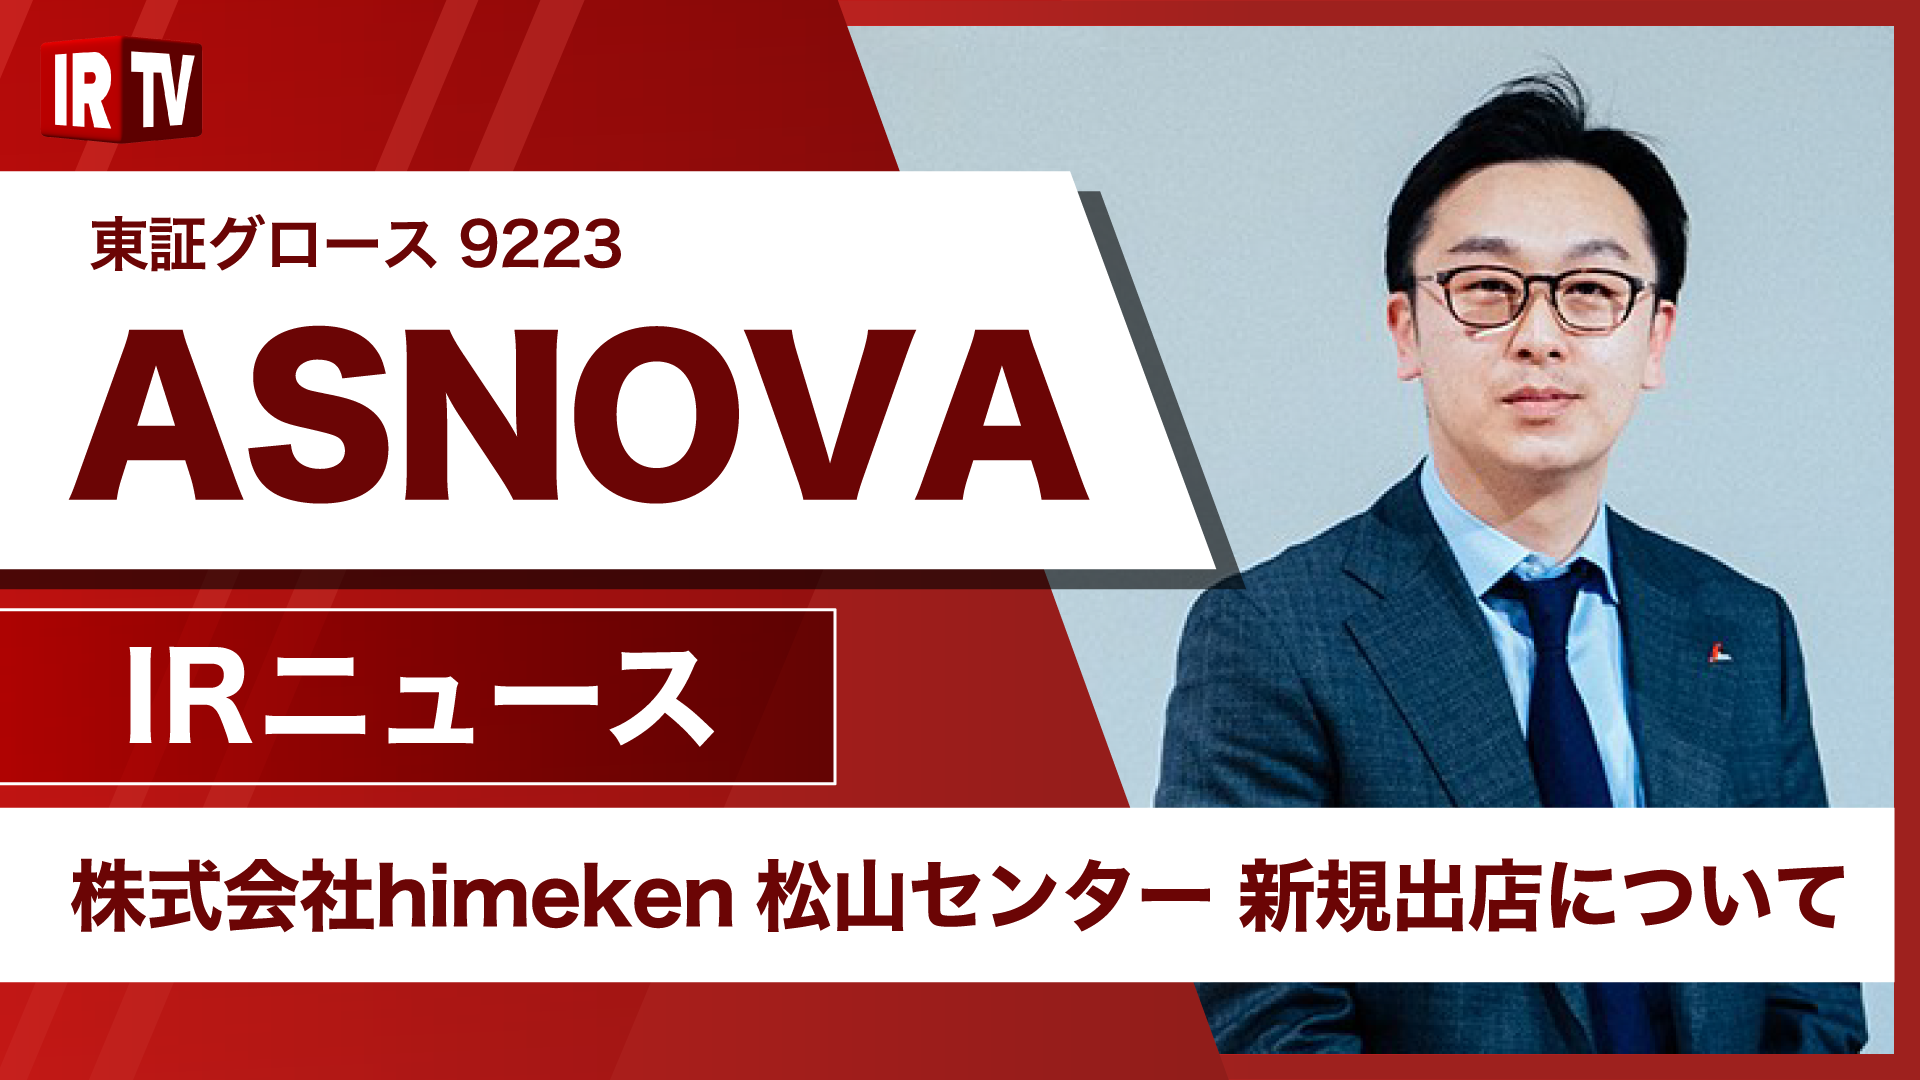 【IRTV 9223】ASNOVA/ASNOVA STATION 株式会社himeken松山センターを新規出店